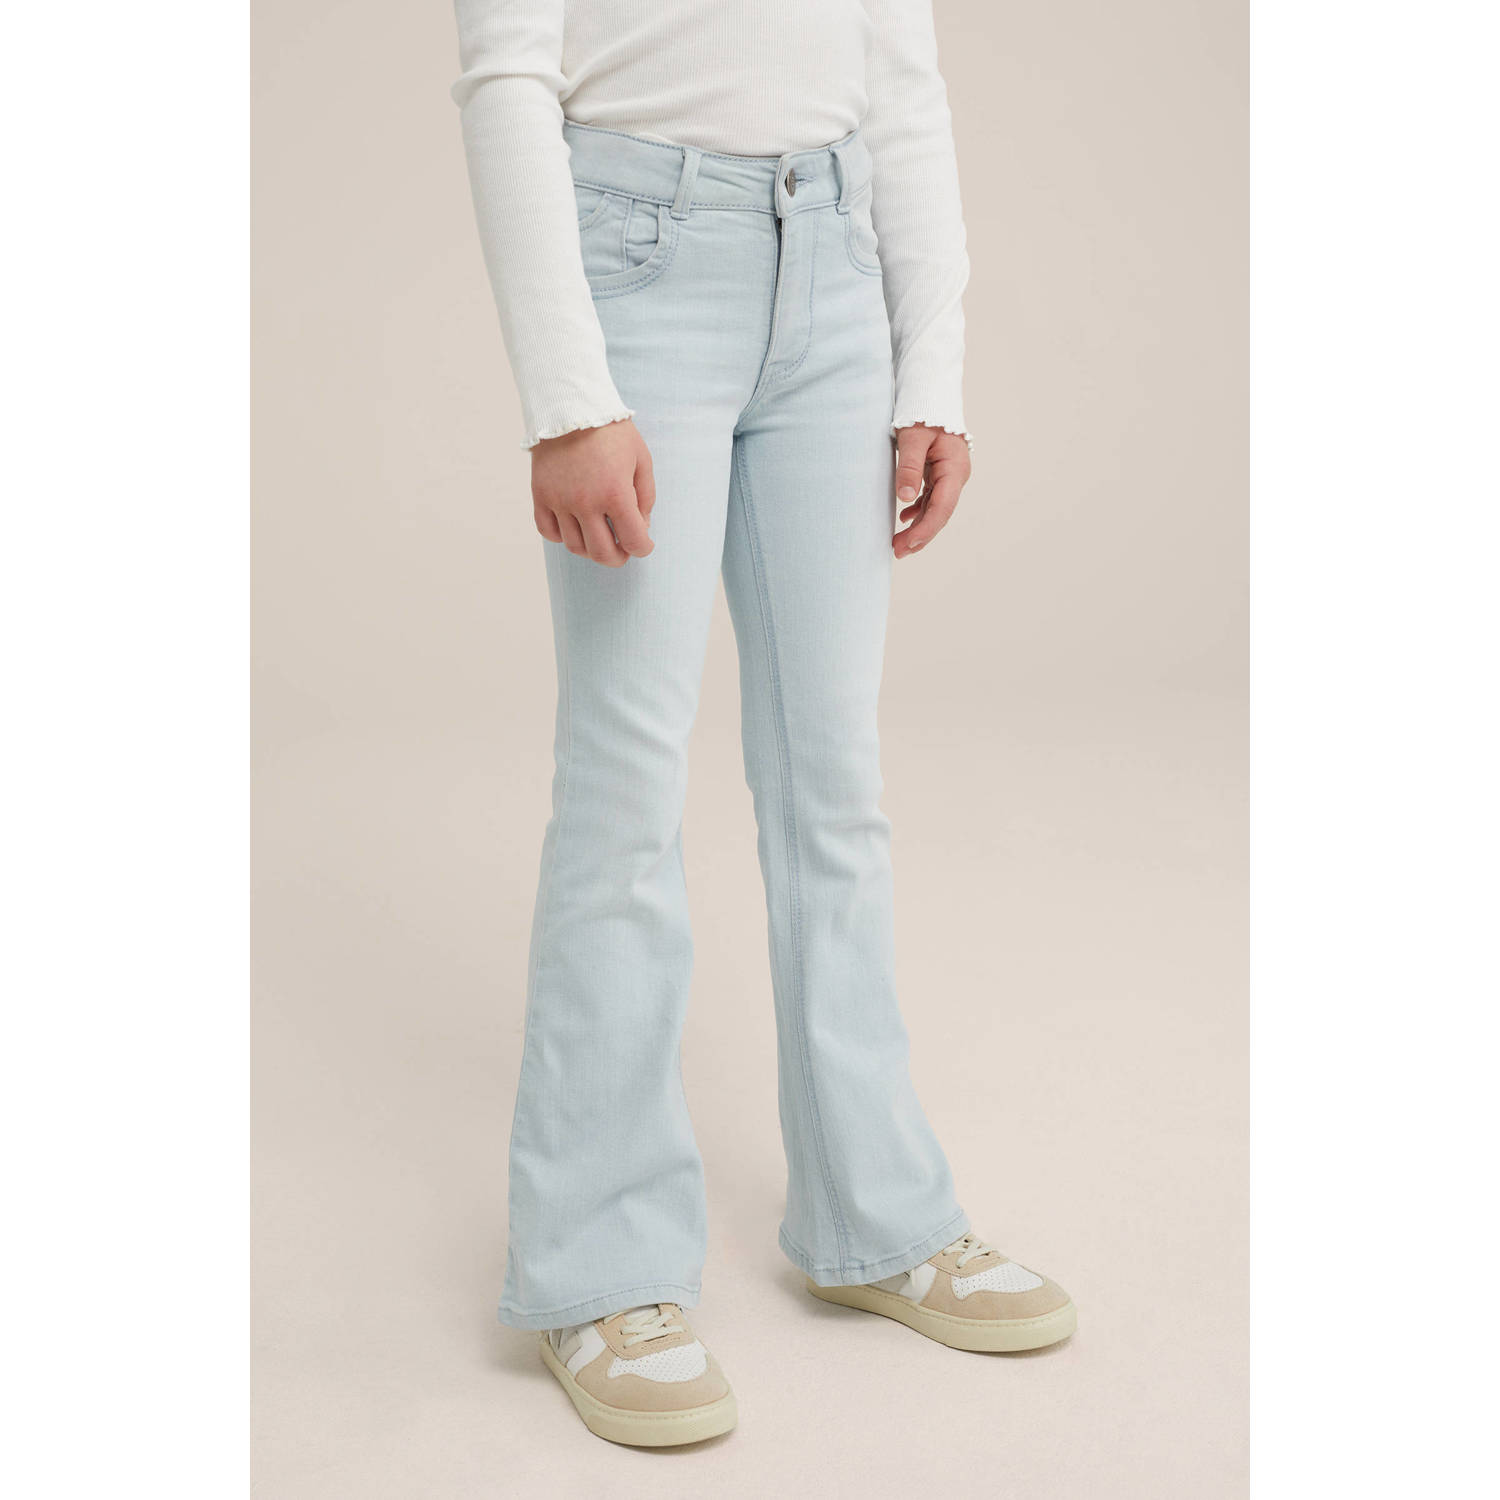 WE Fashion Blue Ridge flared jeans stone denim